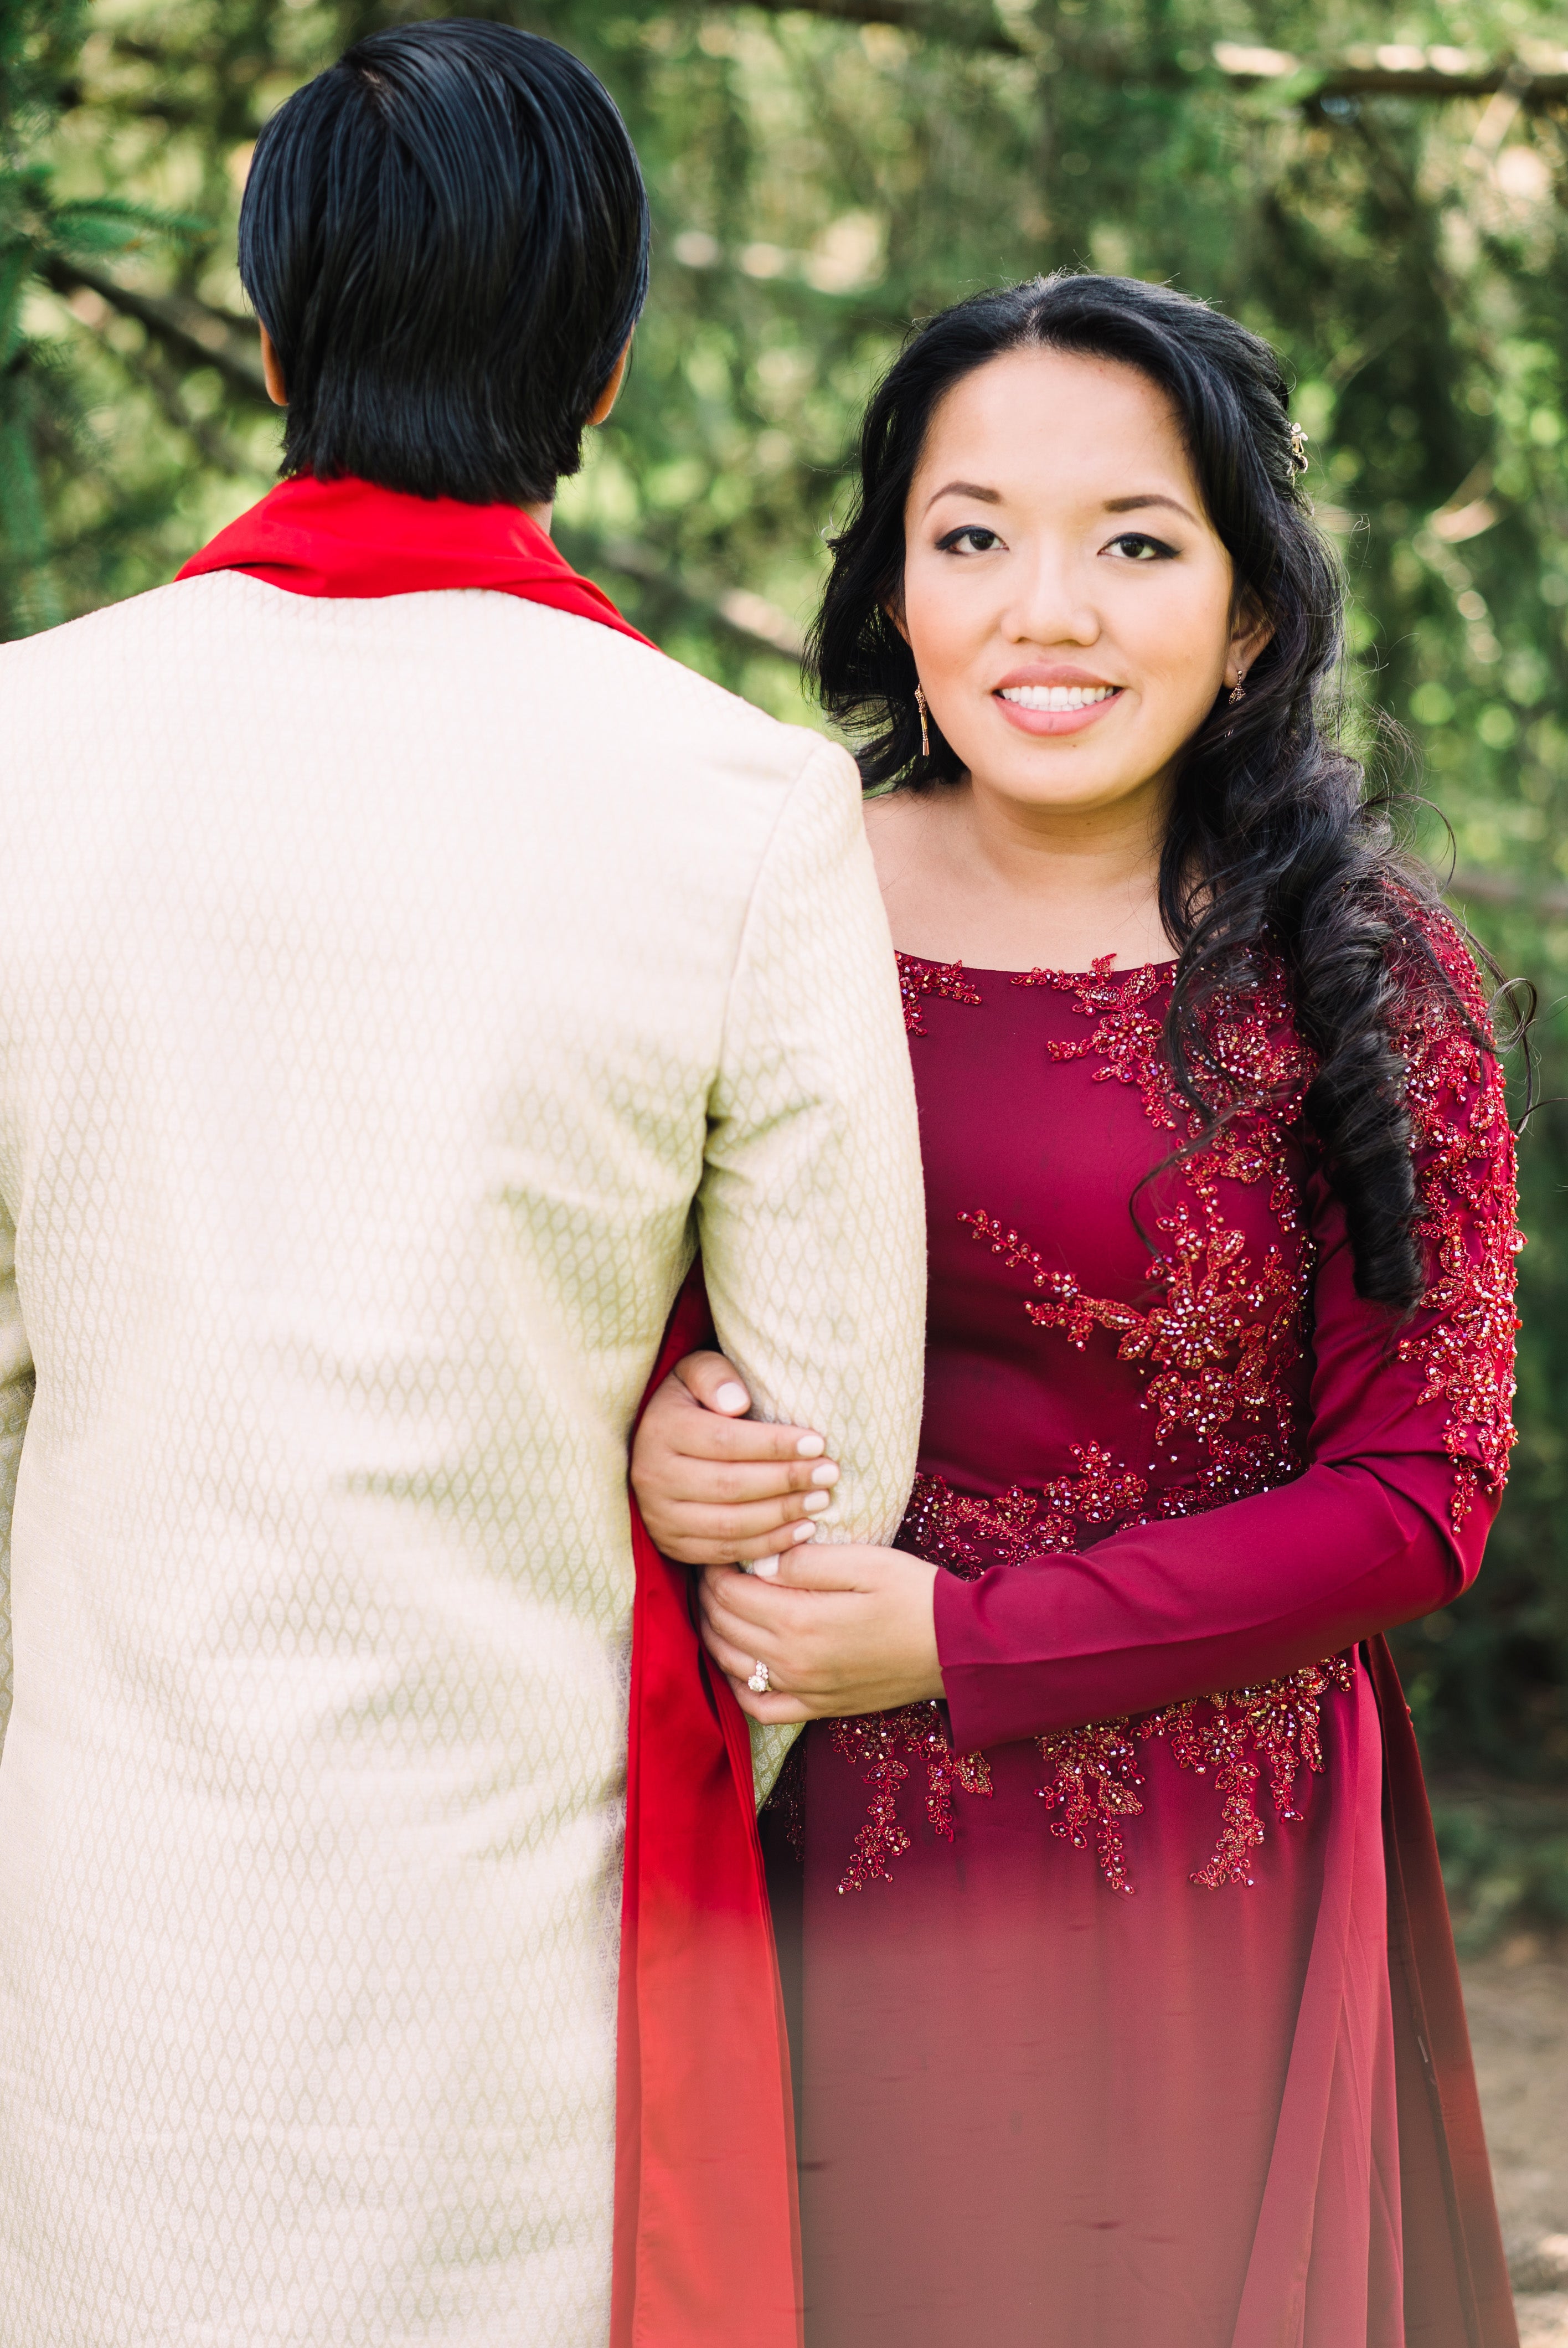 Burgundy Ao Dai | Vietnamese Bridal Dress with Embellishment (#PAPHOS)